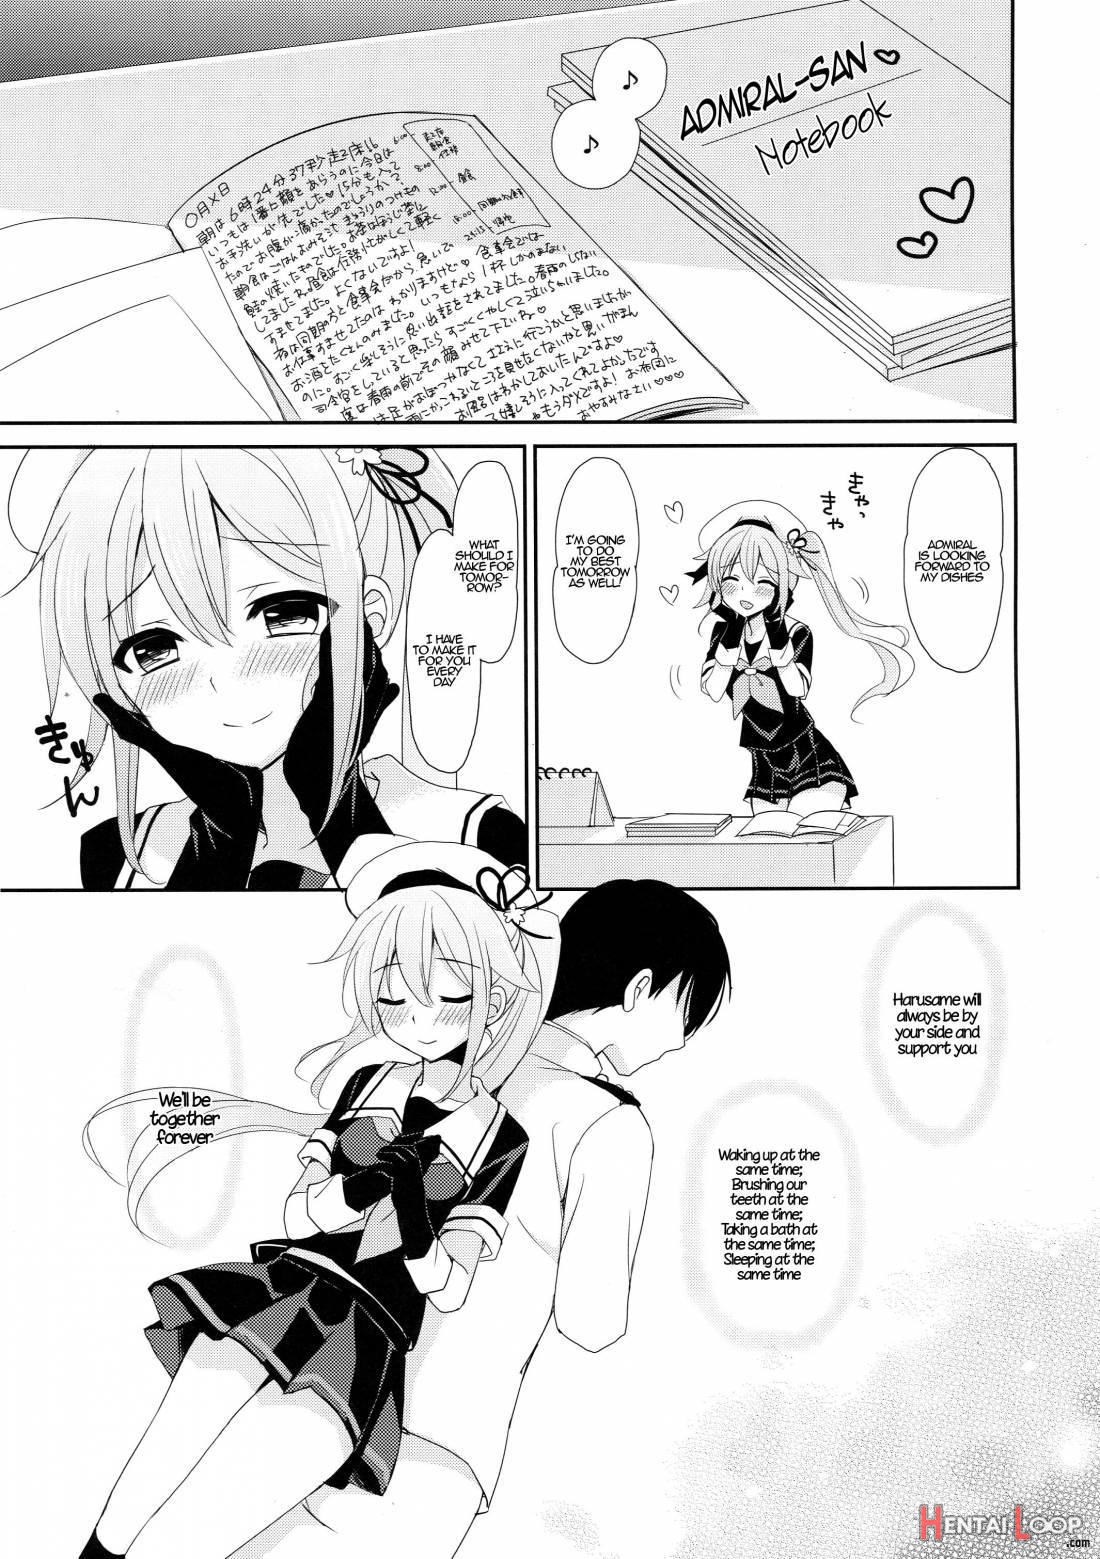 Stalker Harusame-chan page 4